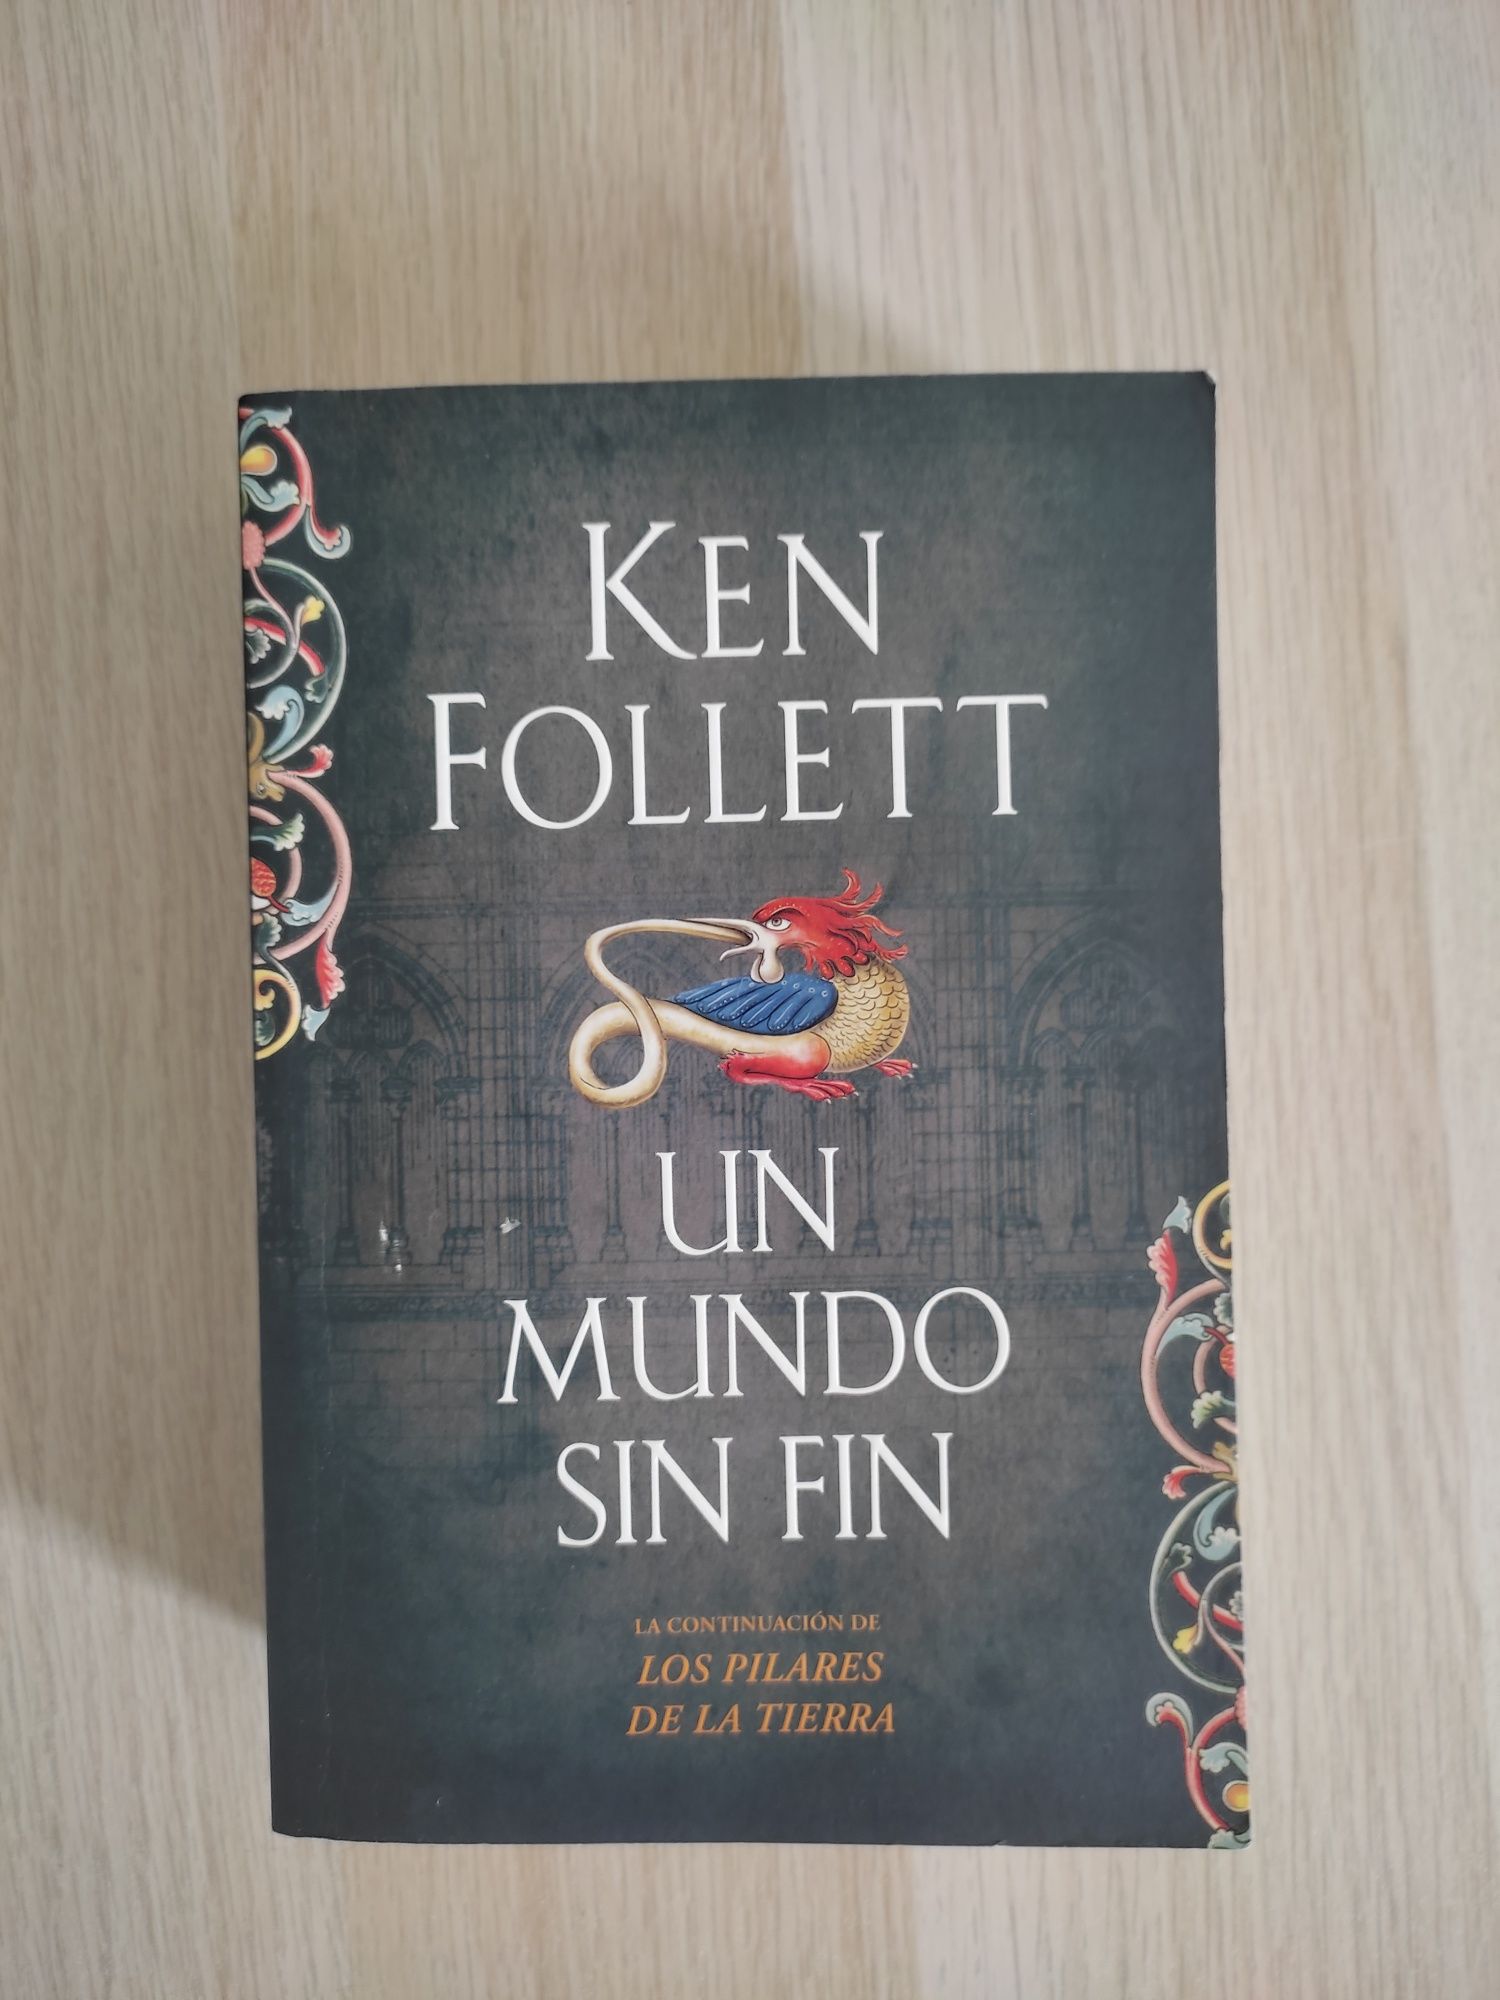 Książka po hiszpańsku 'Un mundo sin fin' Ken Follet